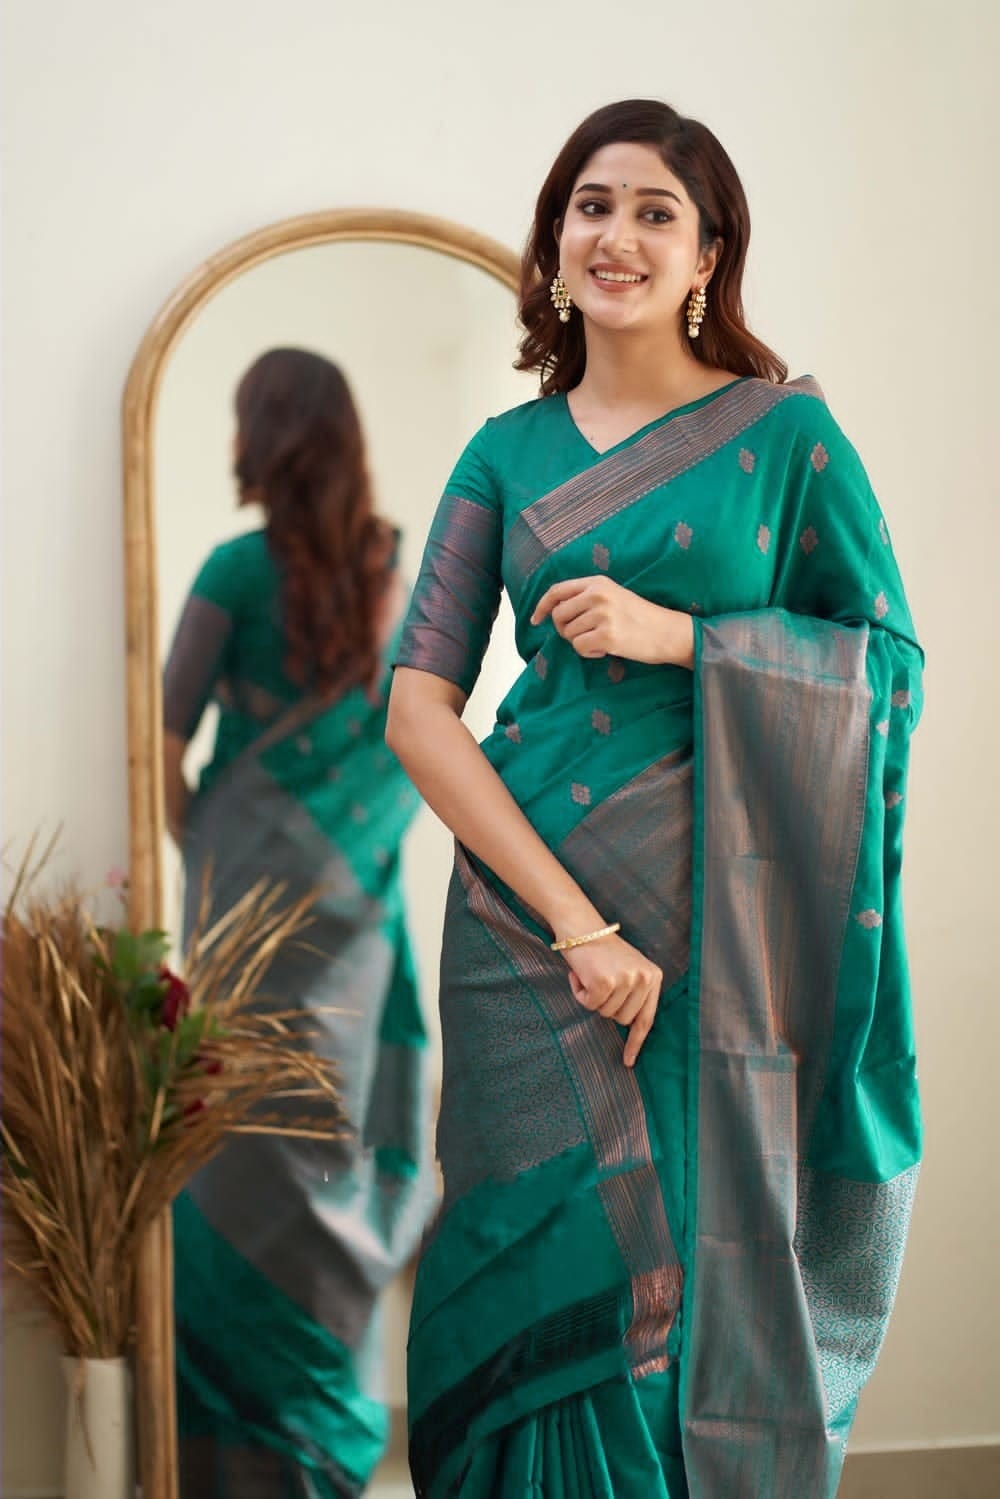 Ravishing Rama Soft Silk Saree With Exceptional Blouse Piece - Colorful Saree